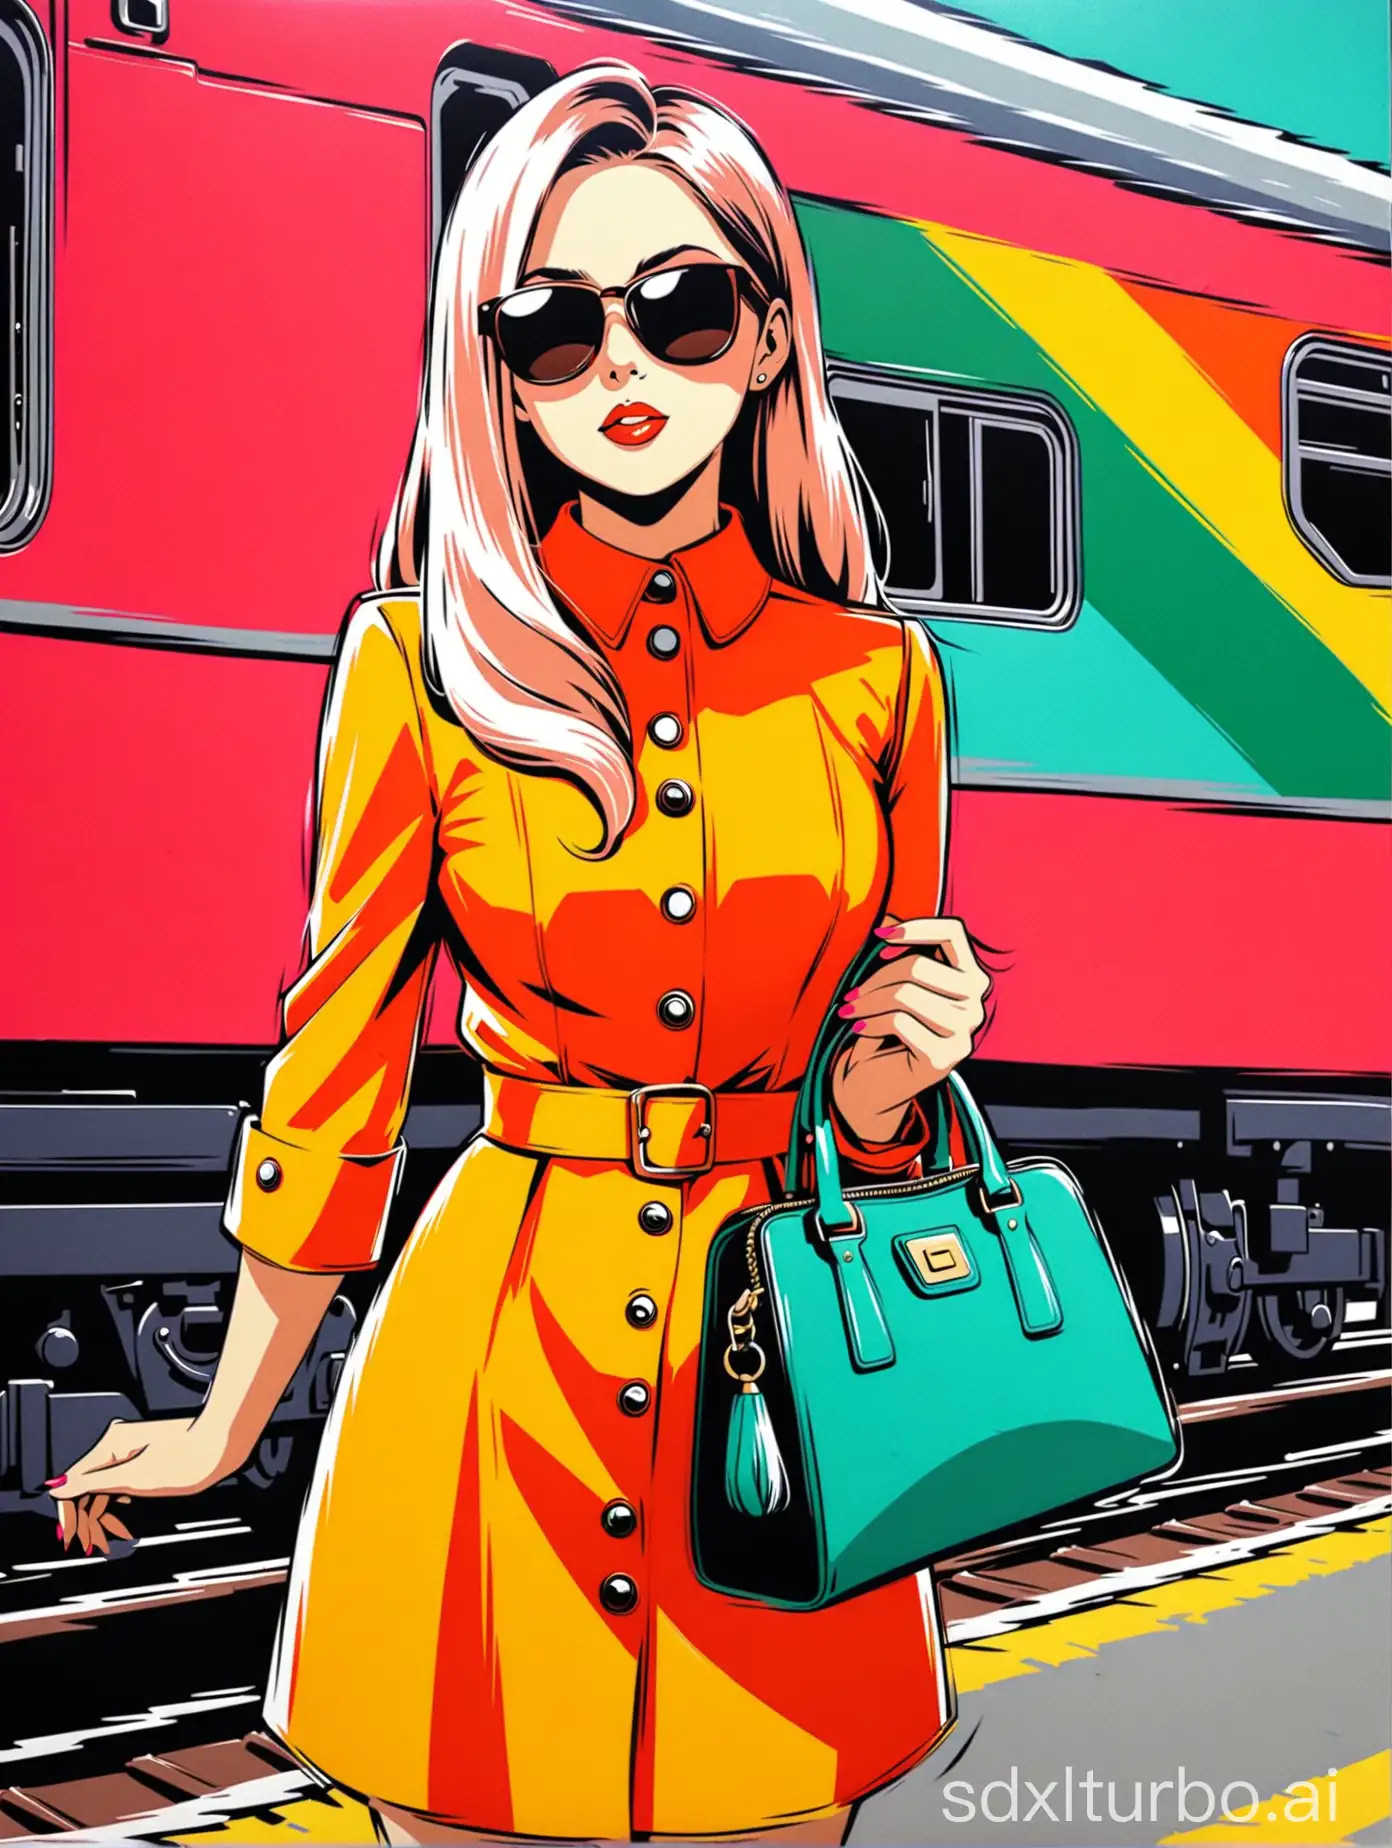 Stylish-Girl-Posing-with-Handbag-Against-Vibrant-Train-Backdrop